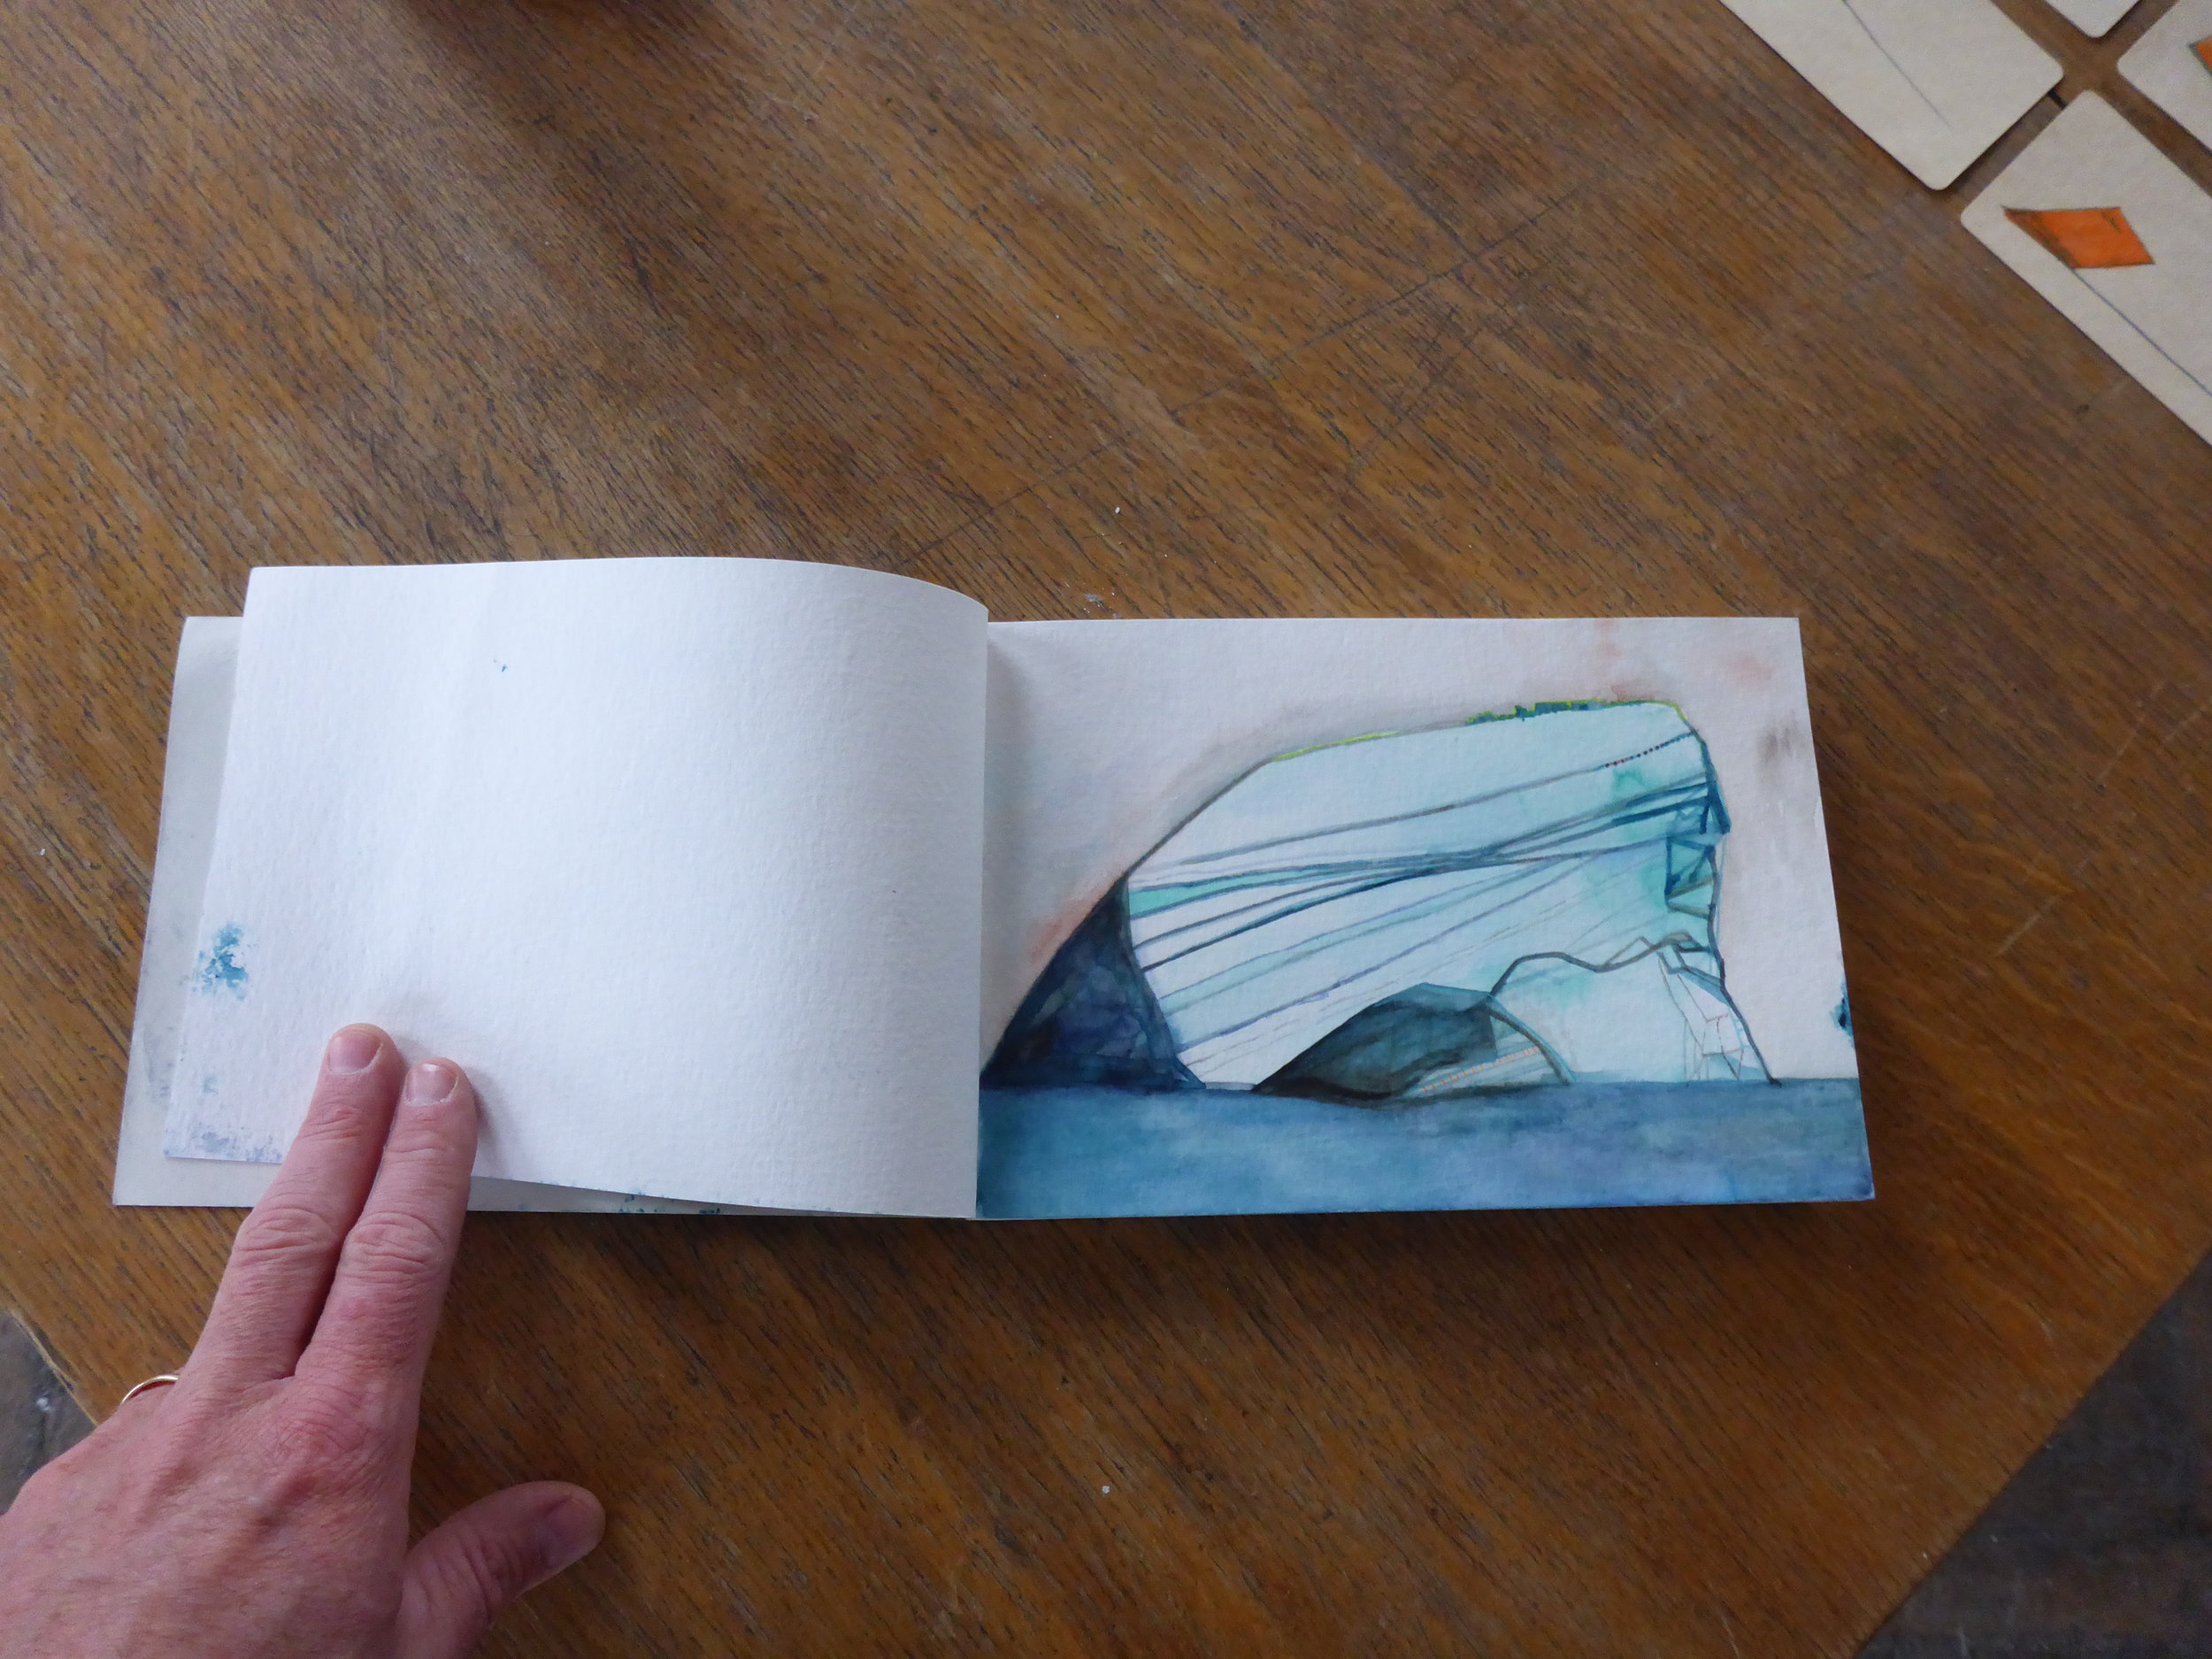  Annie Ewaskio Watercolor on paper,&nbsp;Pyramiden Canteen, Svalbard, Norway, July 2016 